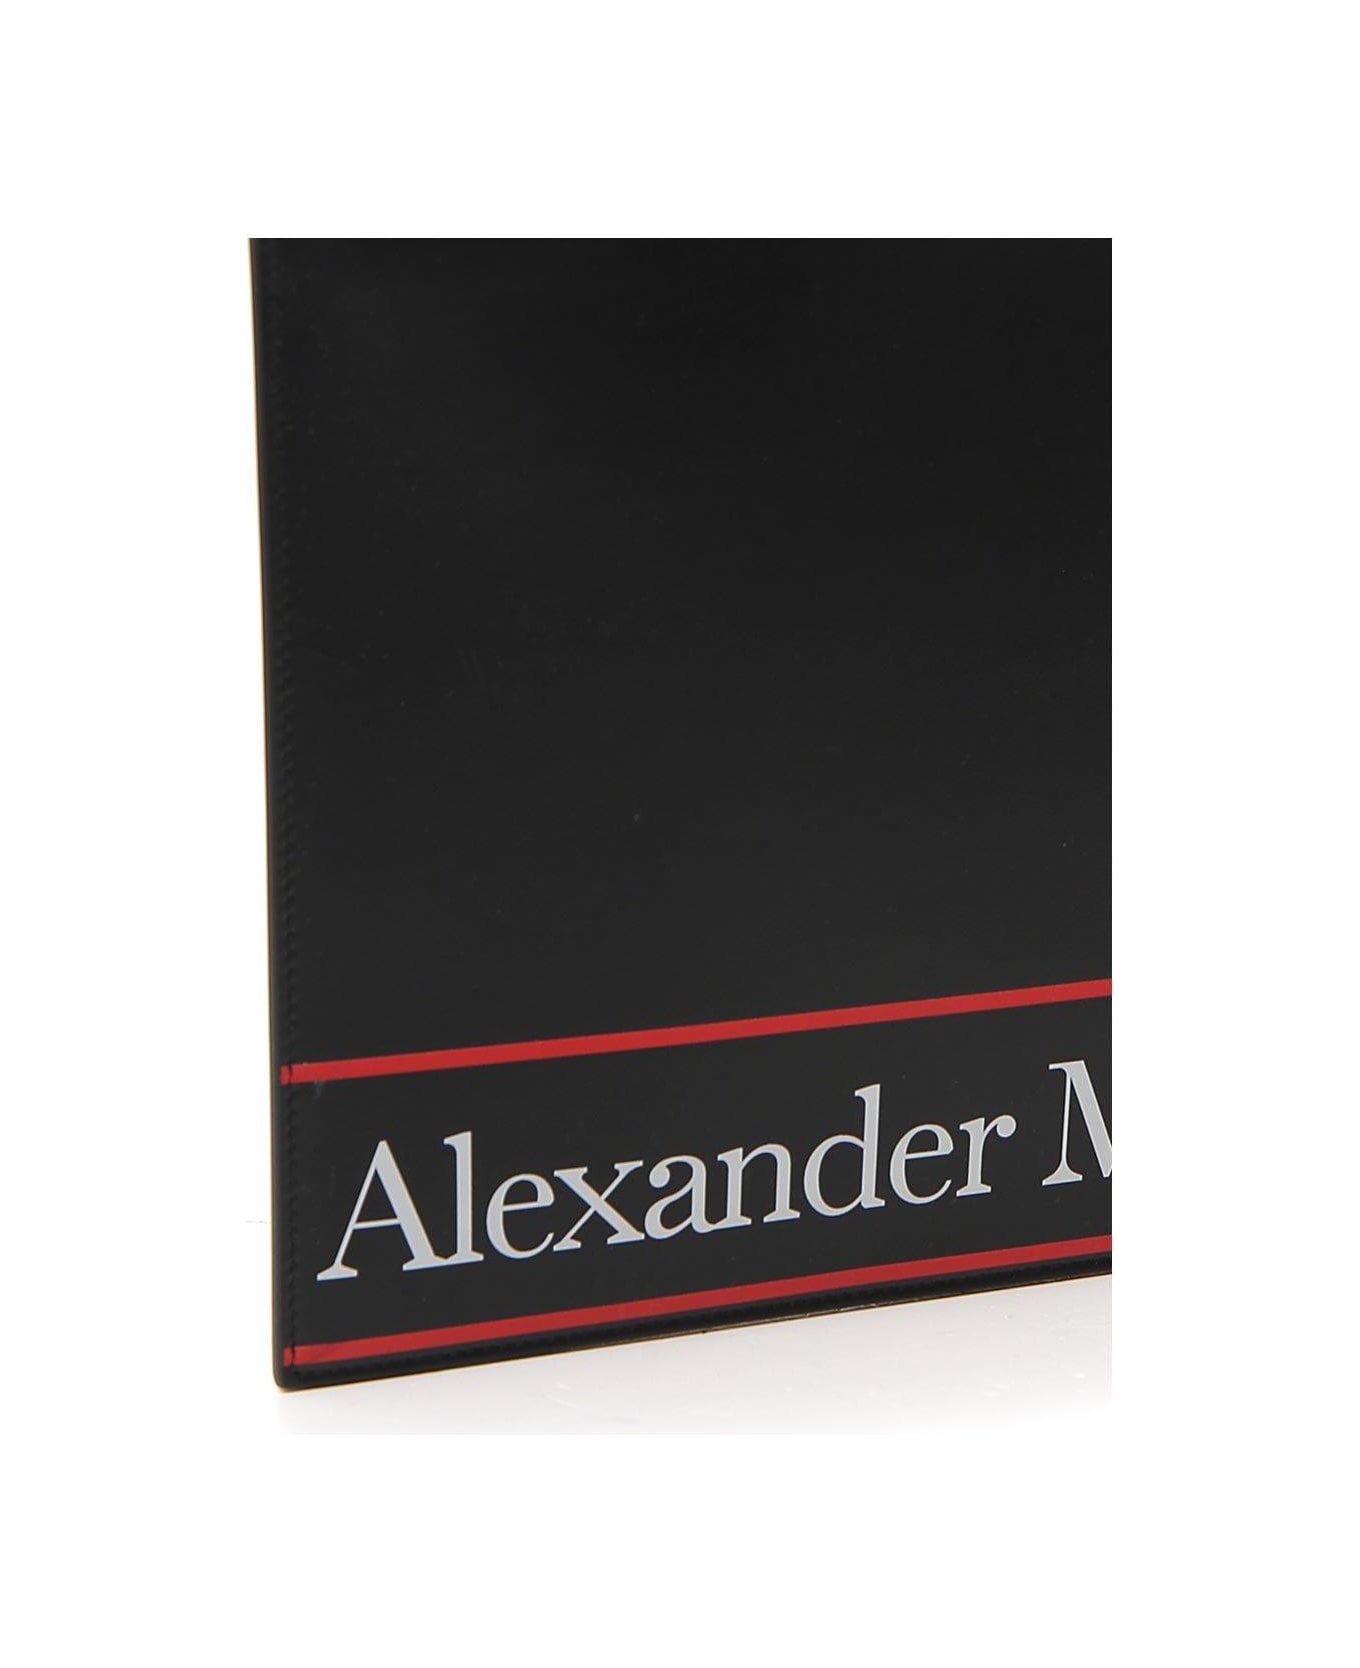 Alexander McQueen Logo Printed Clutch Bag - Black